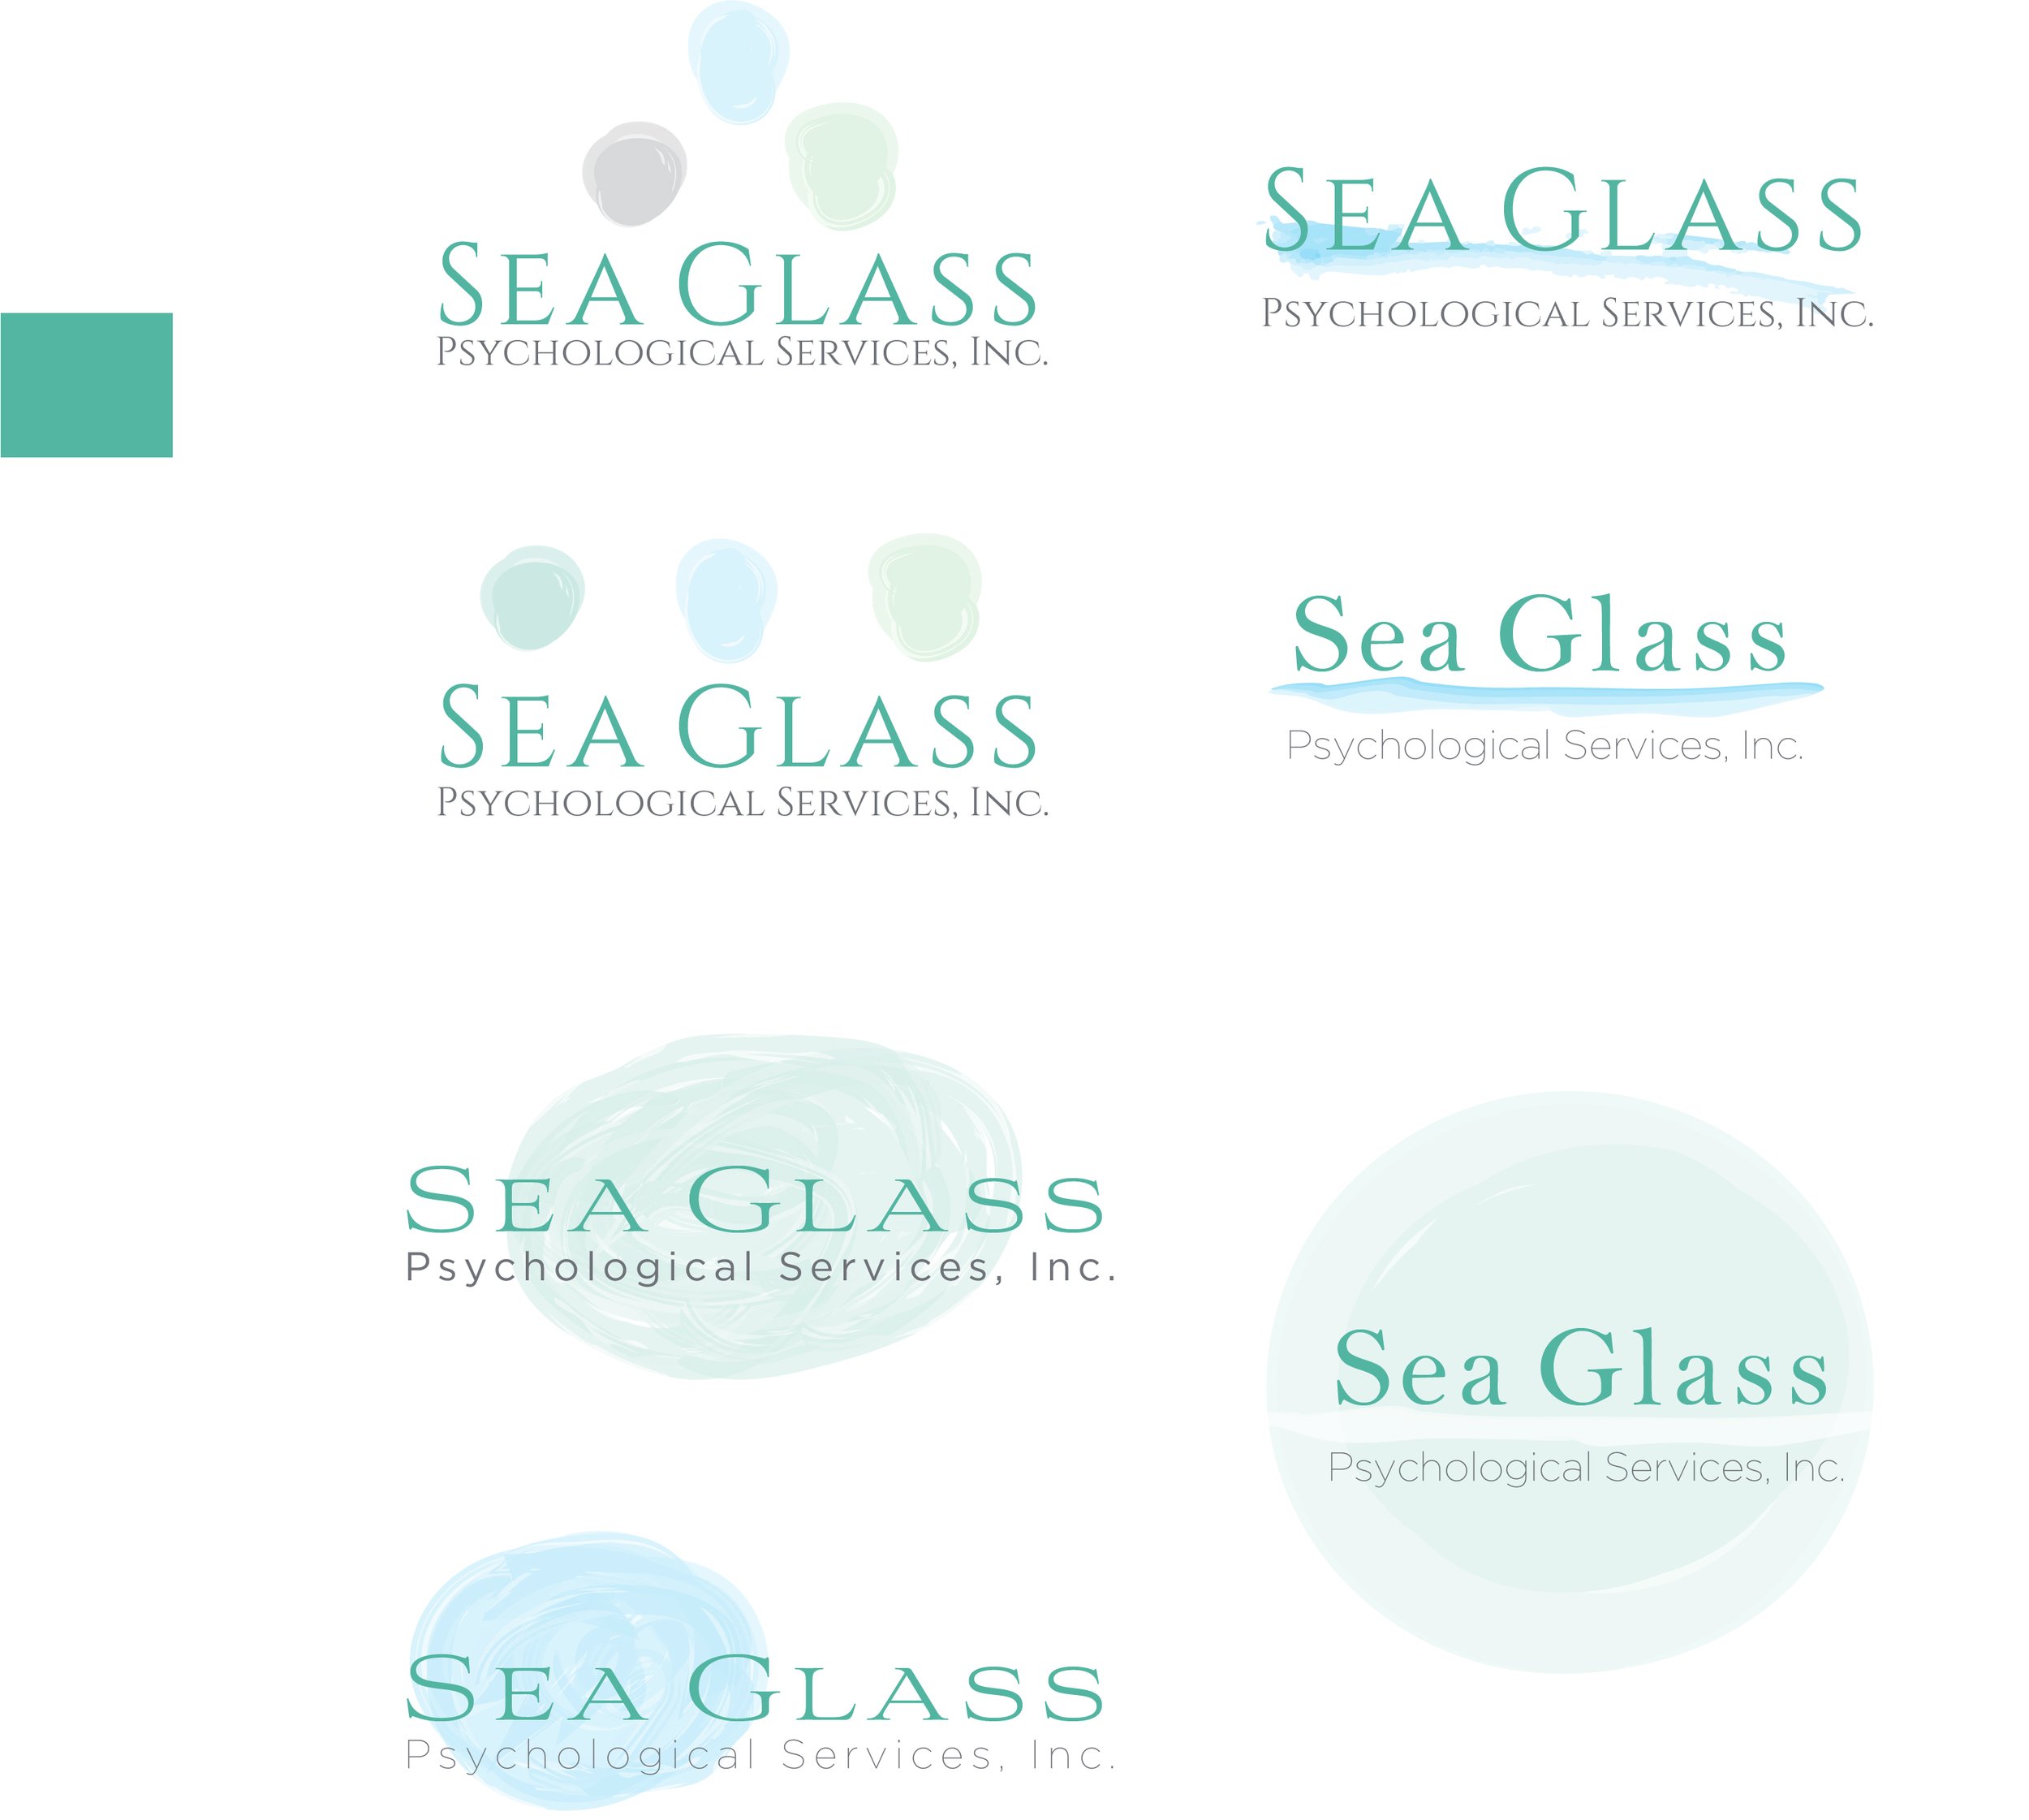 Sea Glass Logos.jpg